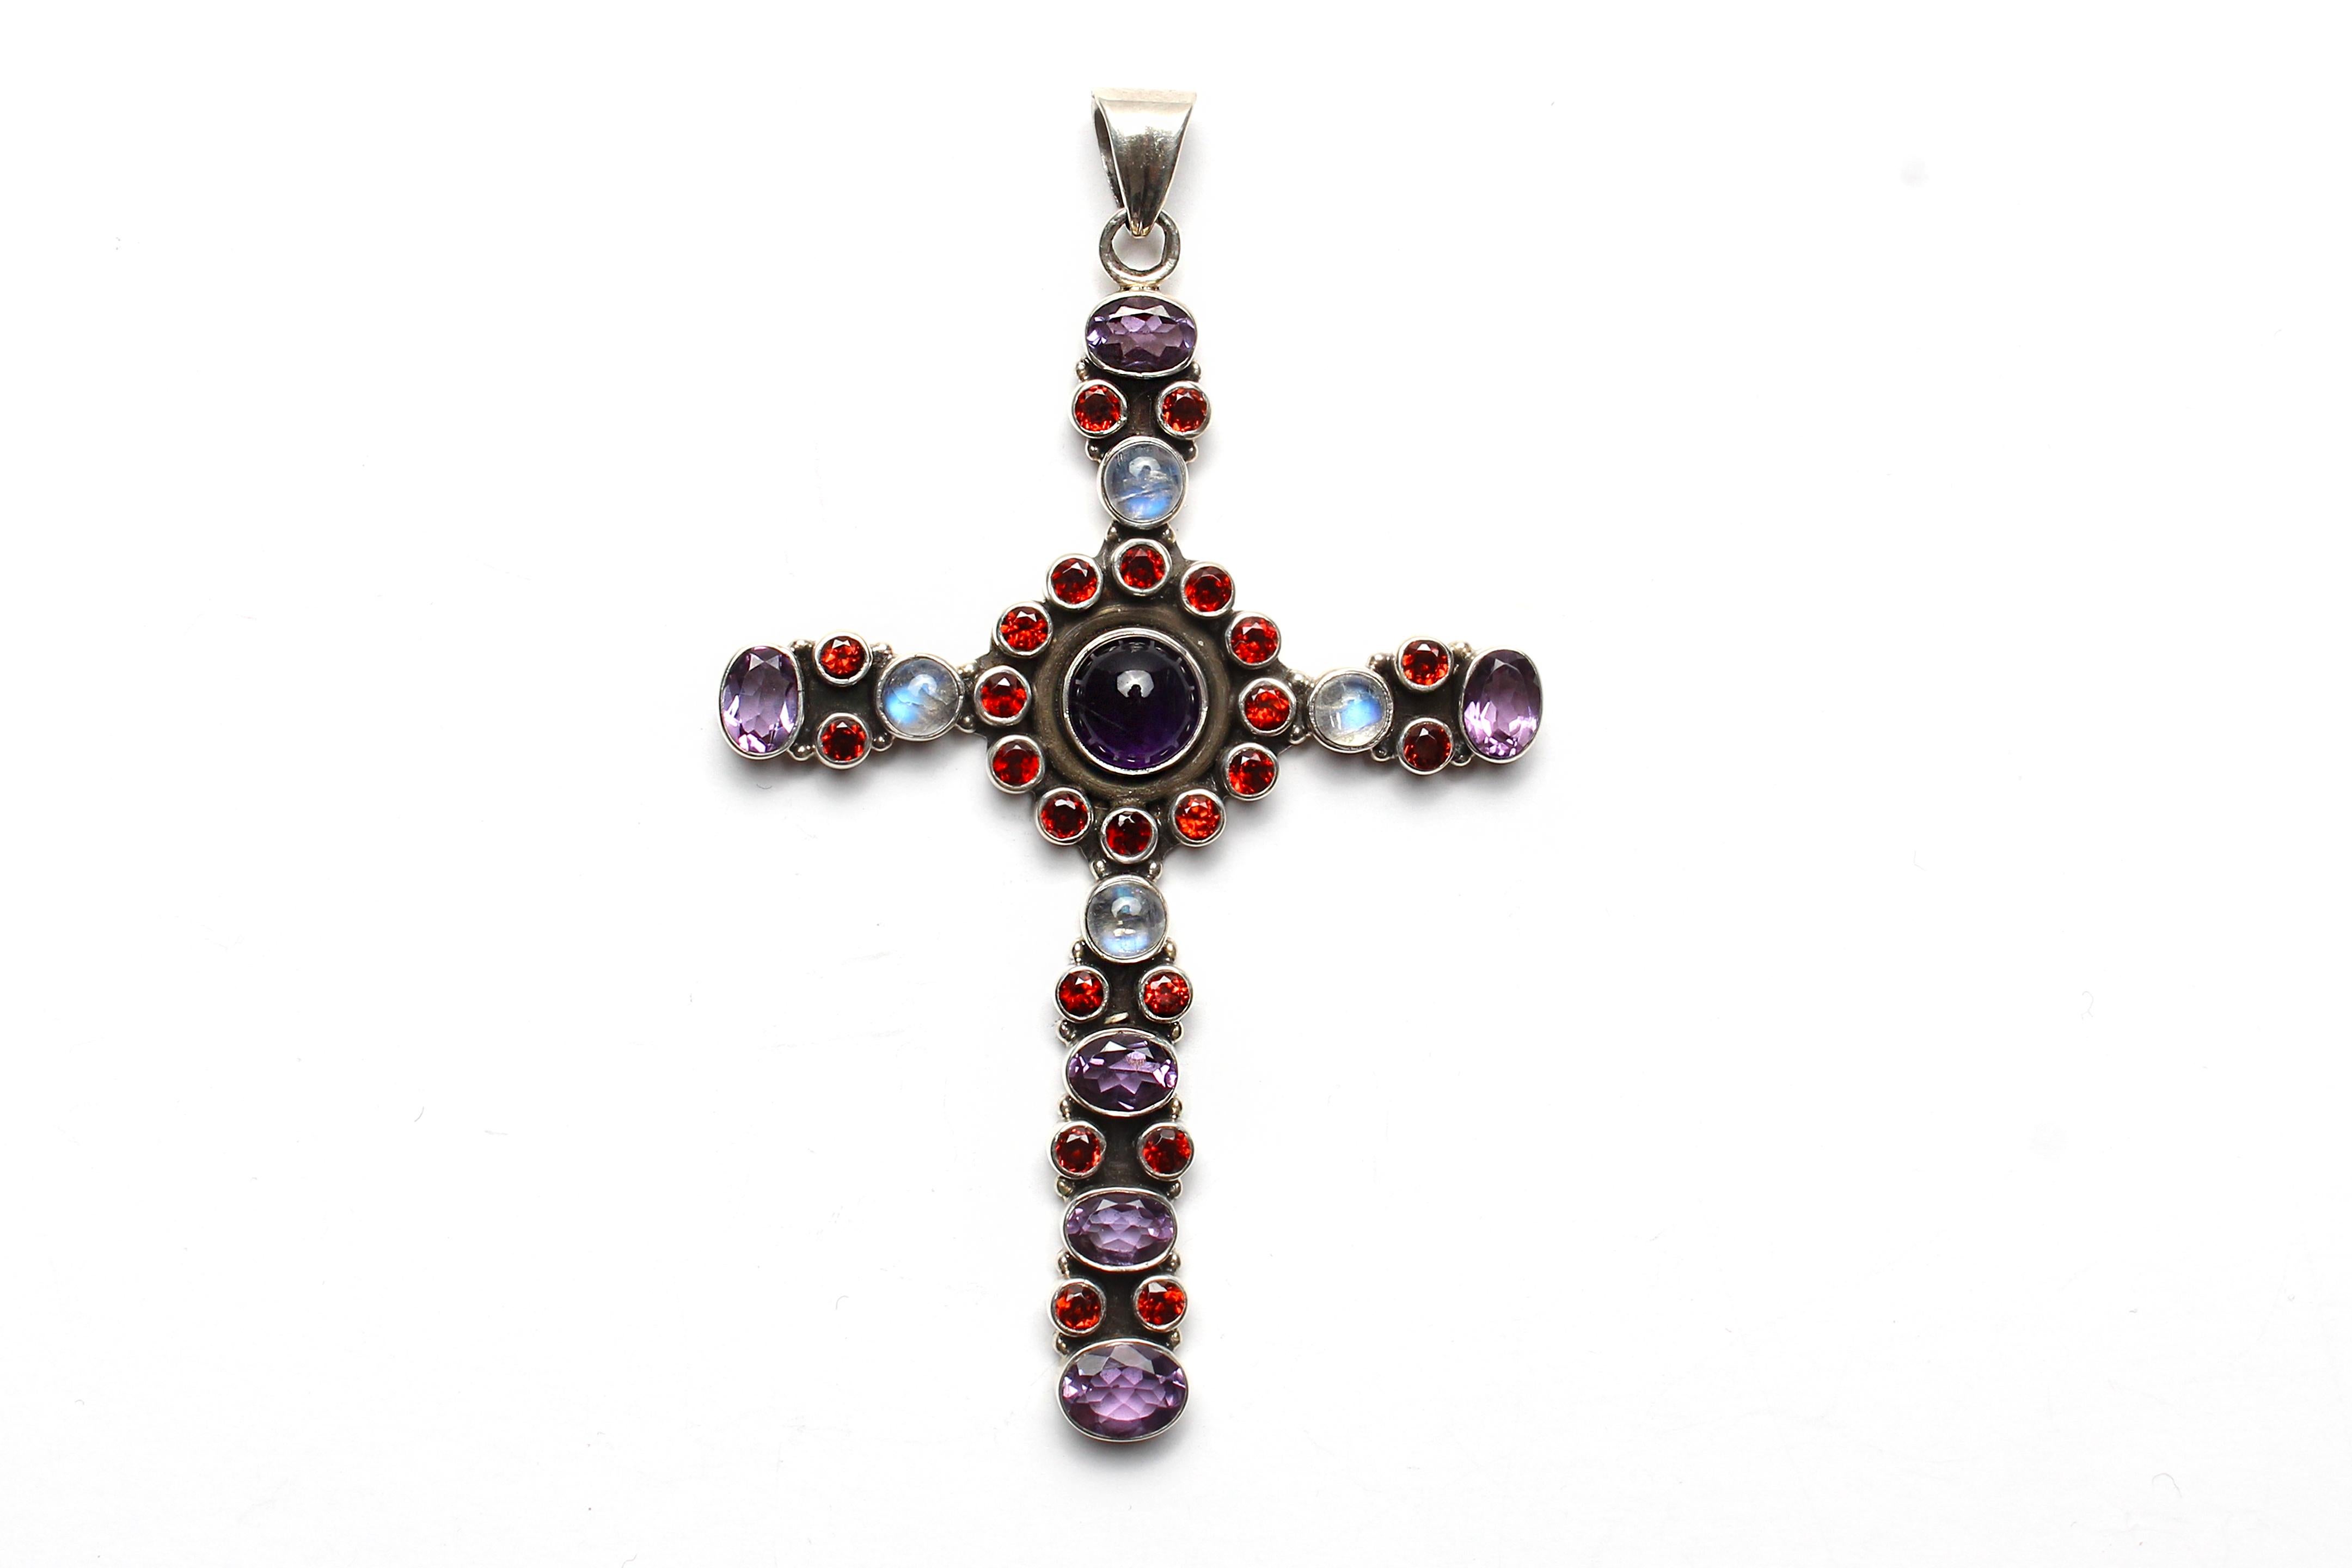 Mixed Cut Clarissa Bronfman Quartz Opal Diamond Rosary & Ruby Amethyst Cross Pendant For Sale